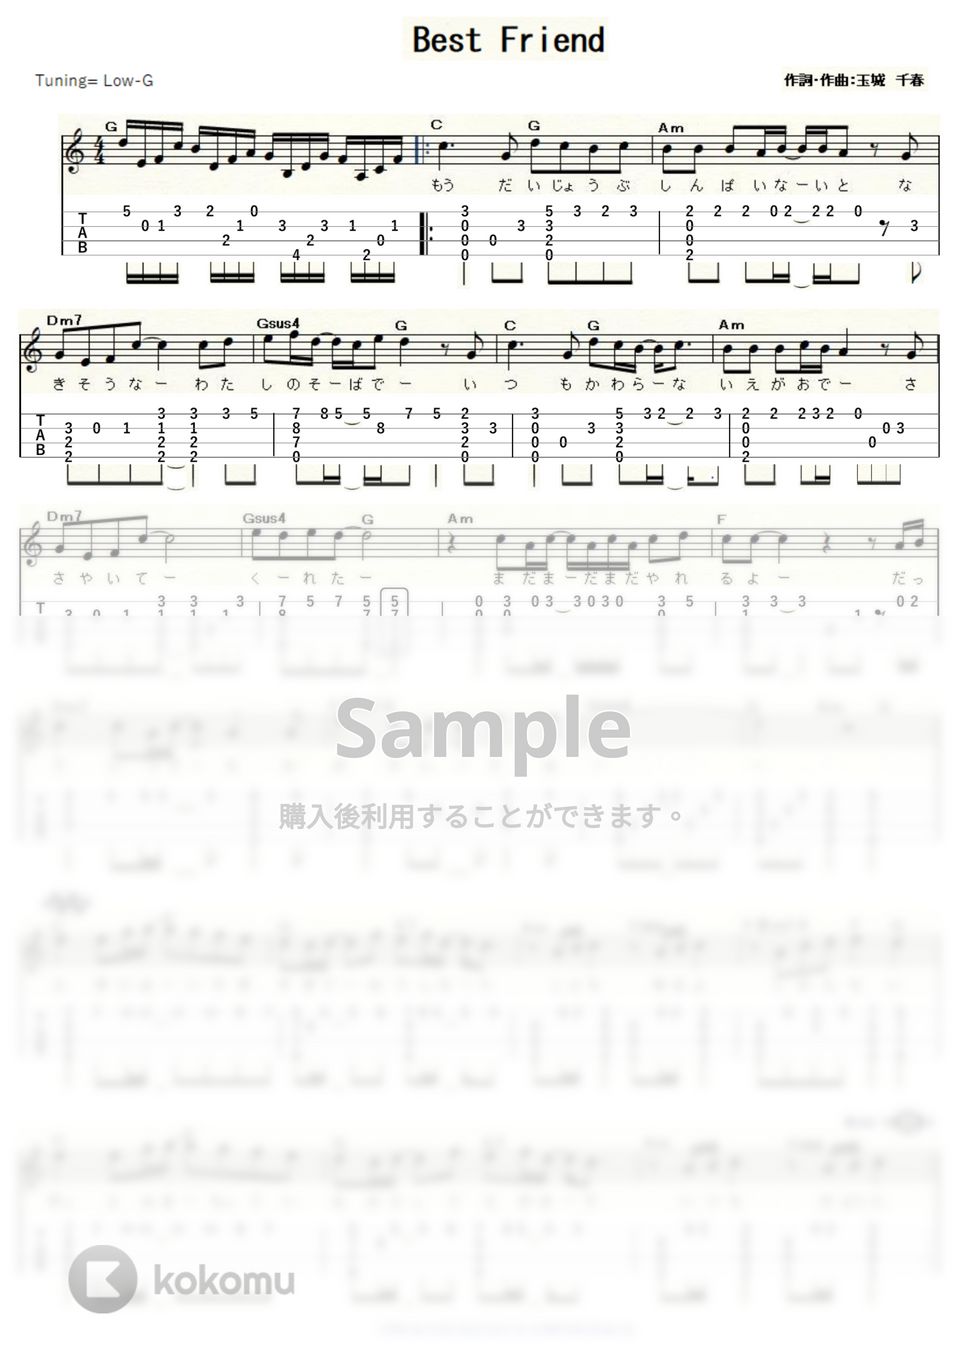 Kiroro - Best Friend (ｳｸﾚﾚｿﾛ/Low-G/中～上級) by ukulelepapa